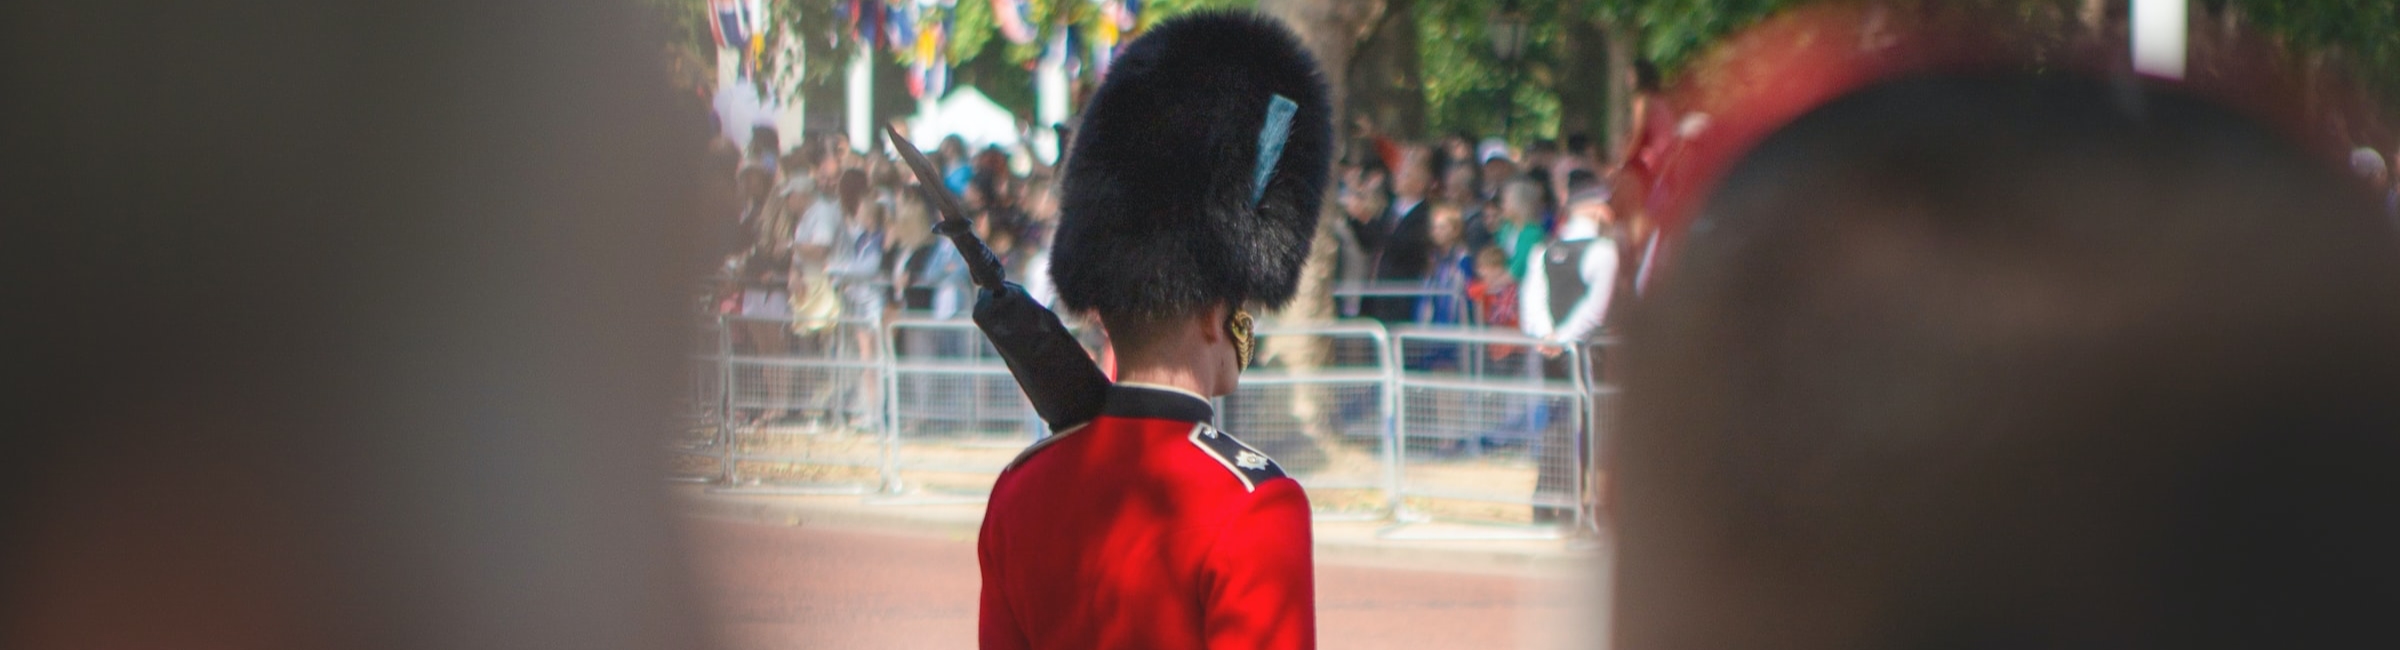 guardsman at queen's funeral